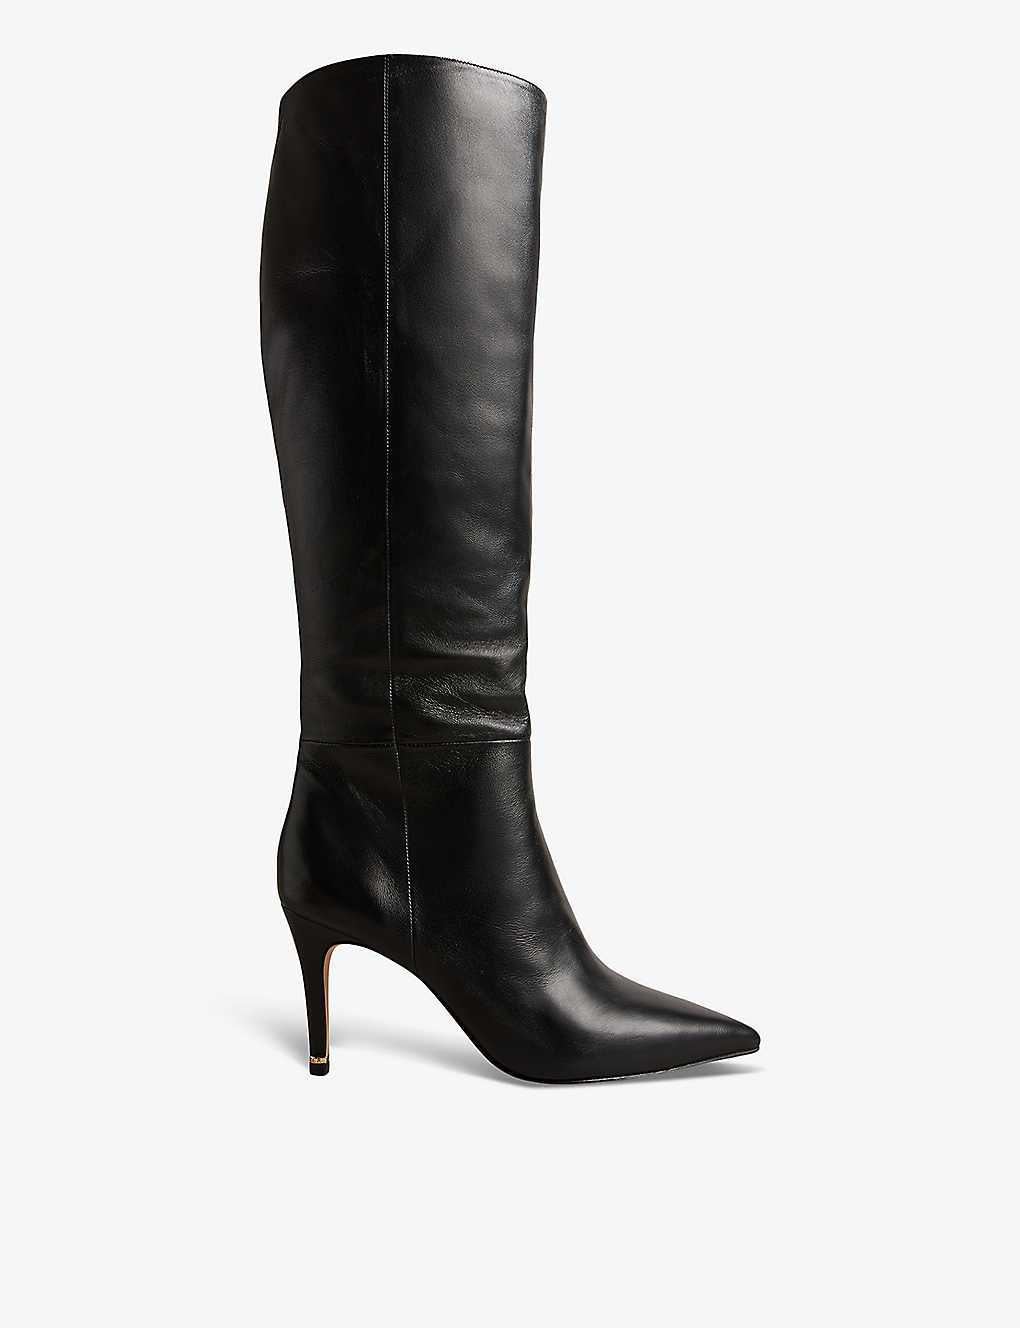 TED BAKER - Yolla knee-high leather boots | Selfridges.com